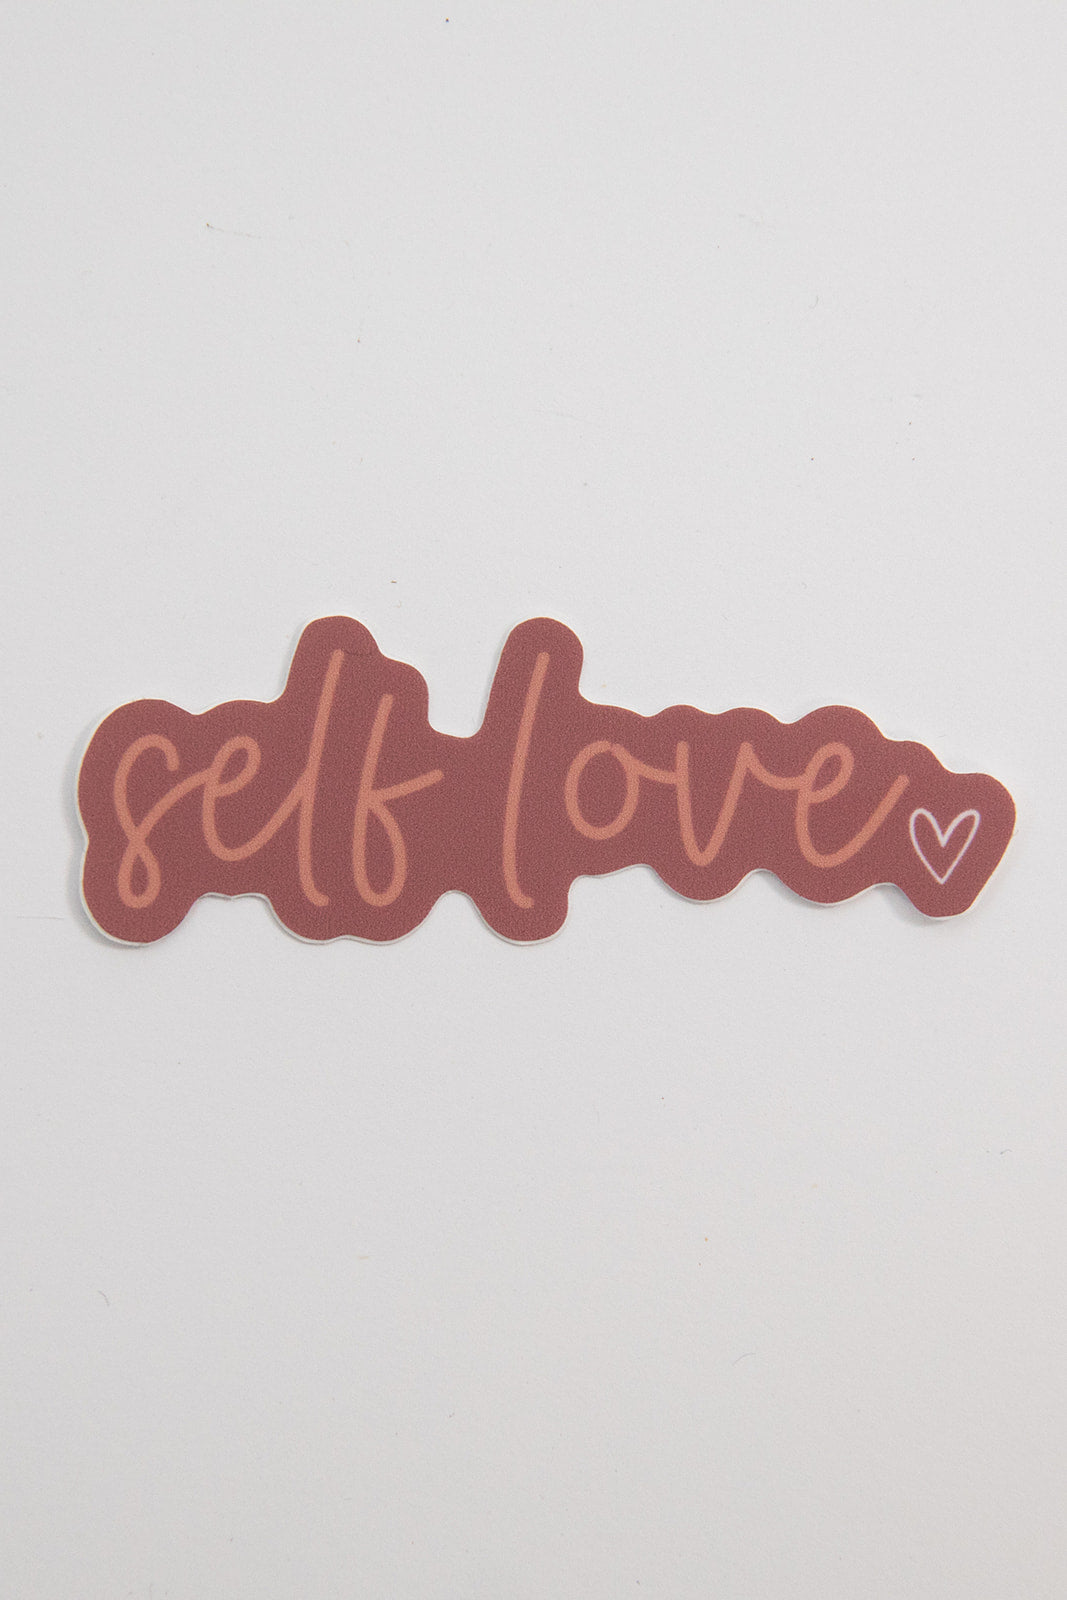 “Self love” sticker